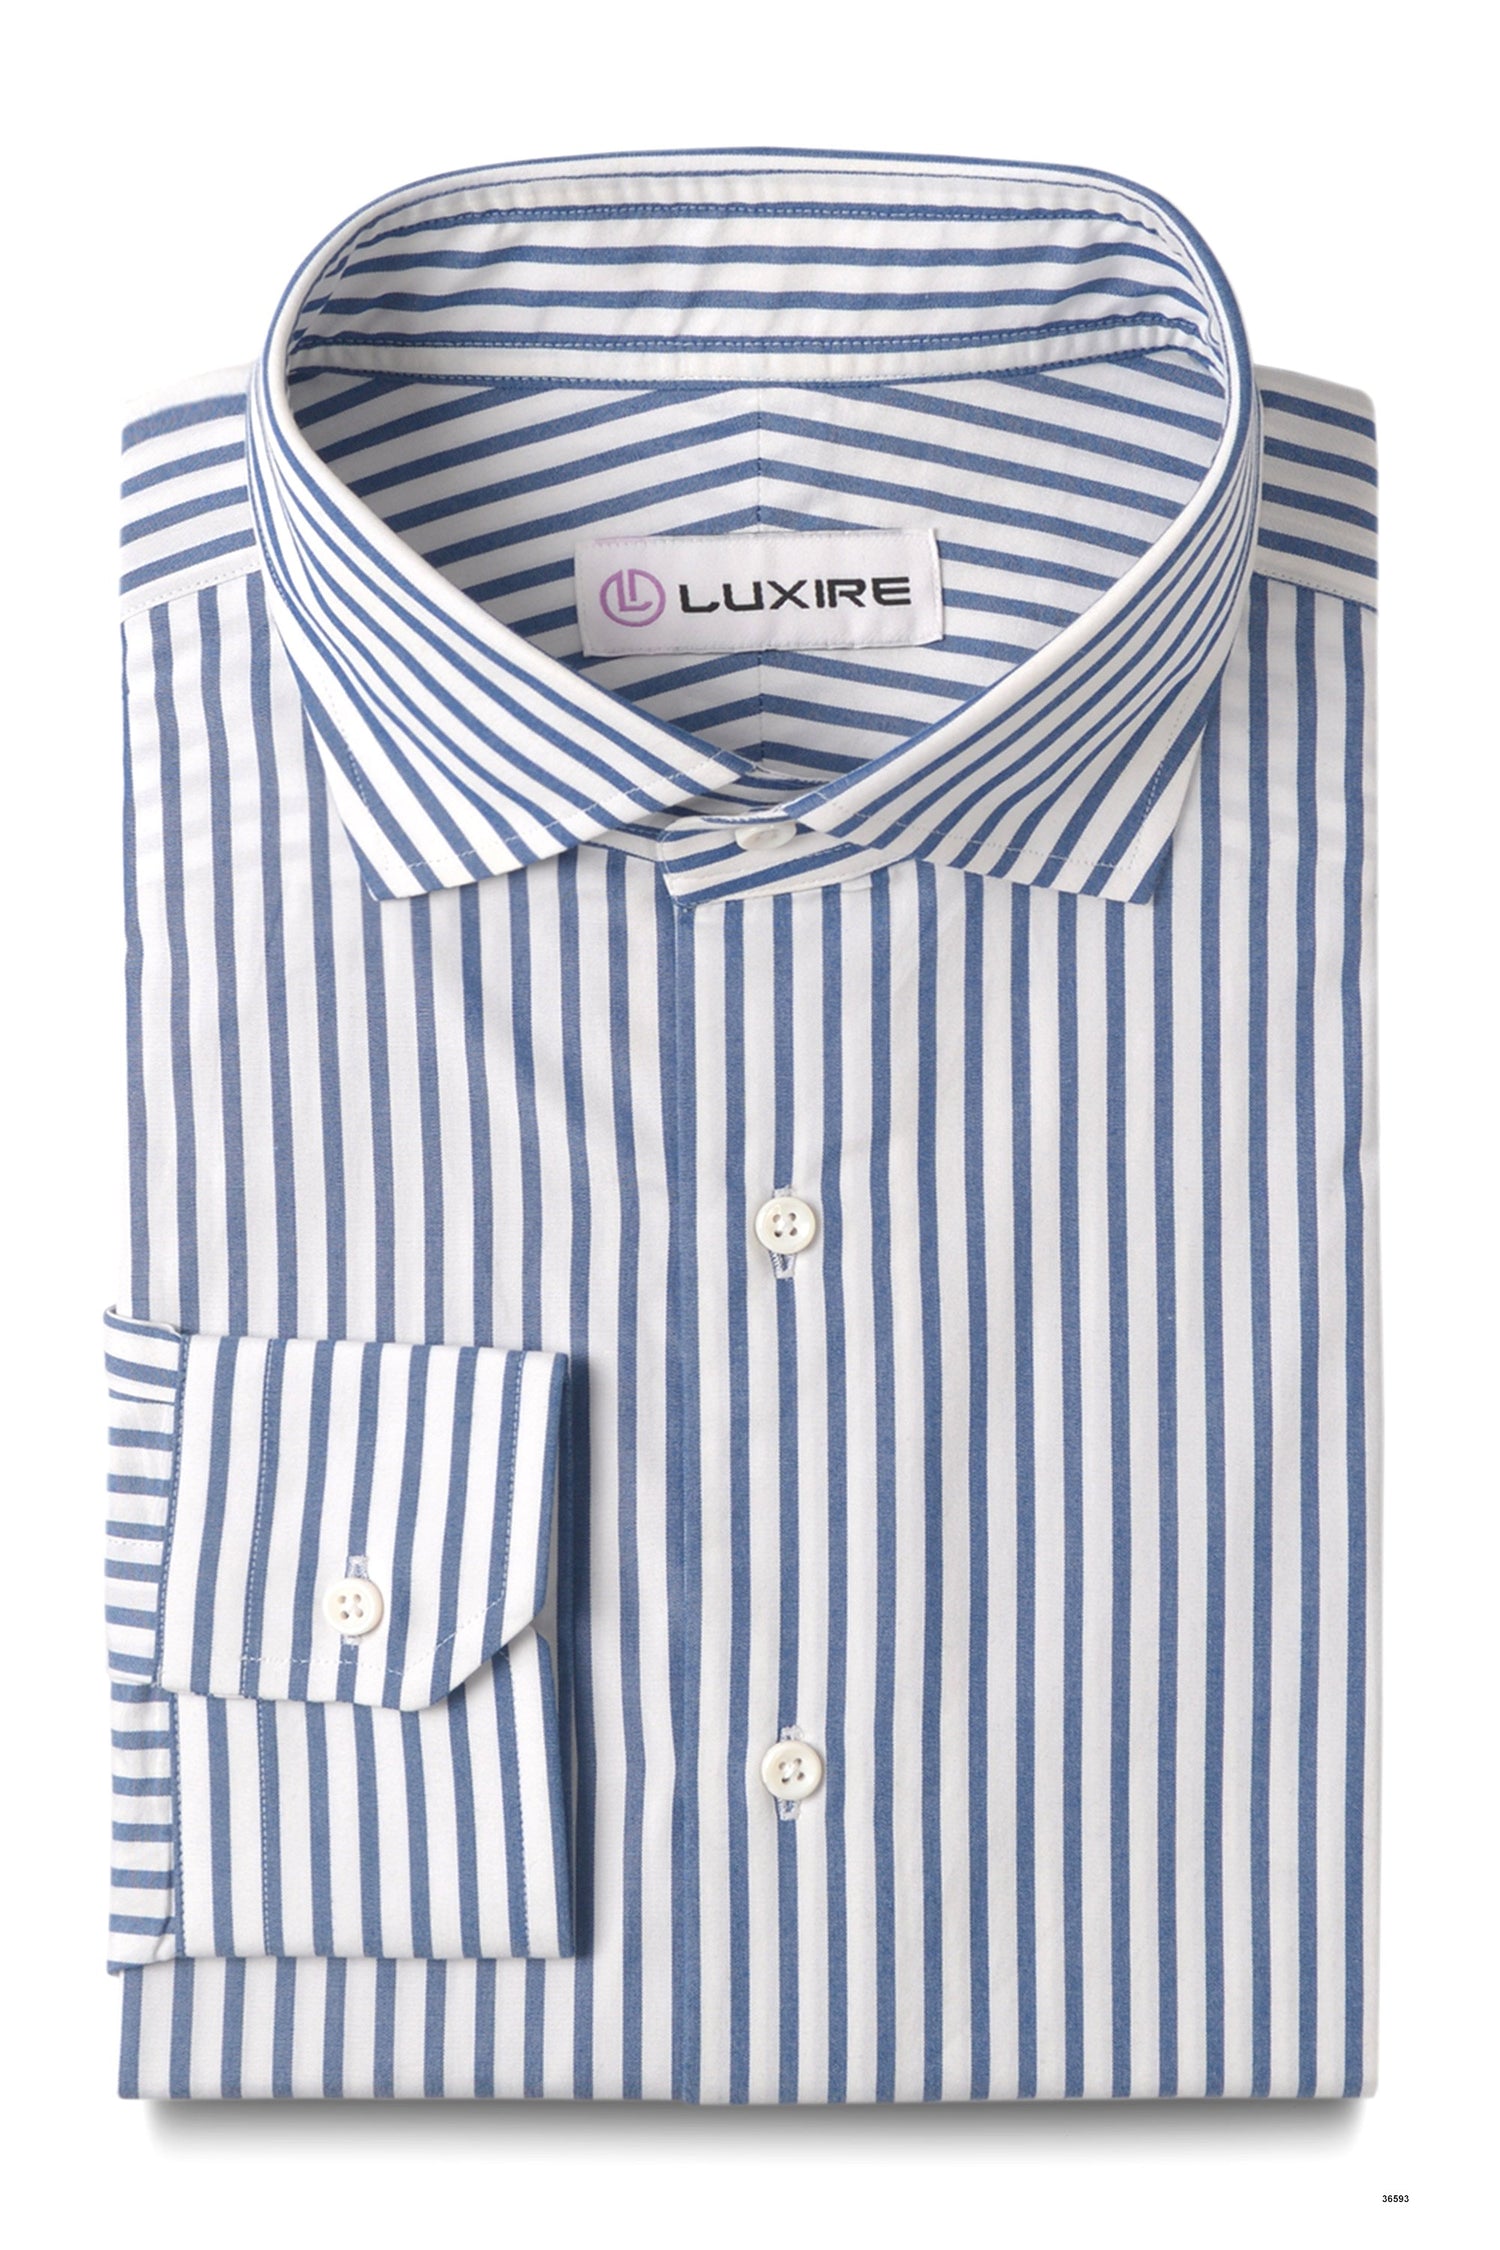 Friday Shirt: Blue Pencil Stripes On White (228922789)